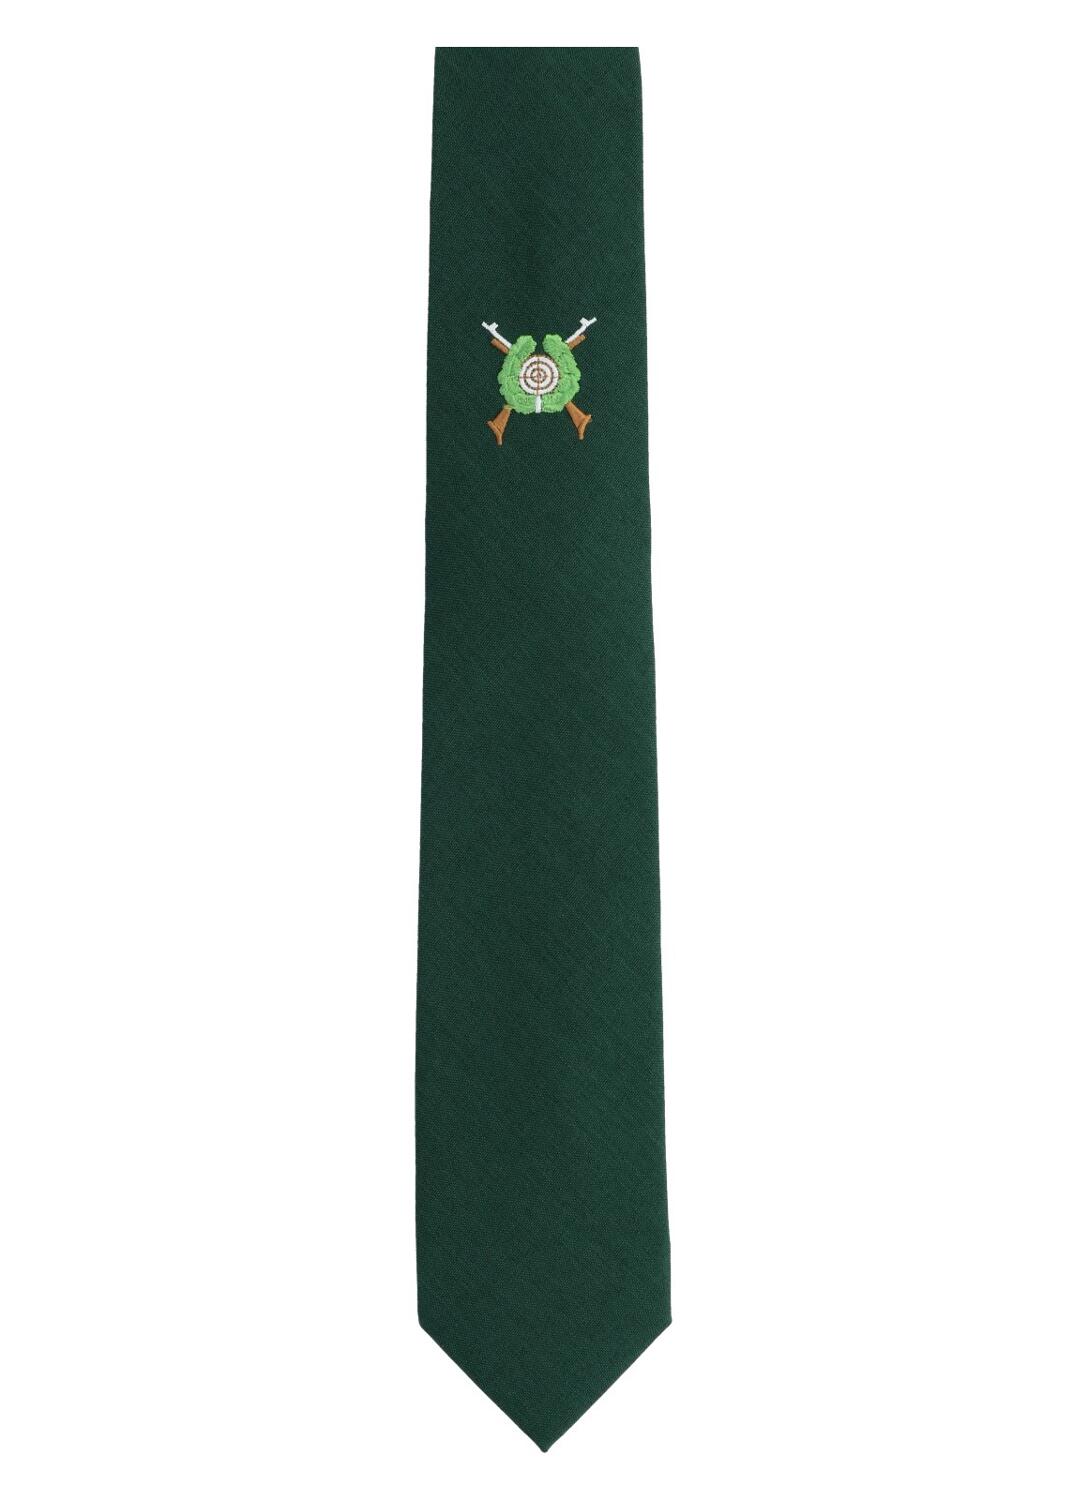 Willen Schützenkrawatte,Krawatte,Krawatte grün,Krawatte | Deutschland Anzug Hemd,Krawatte